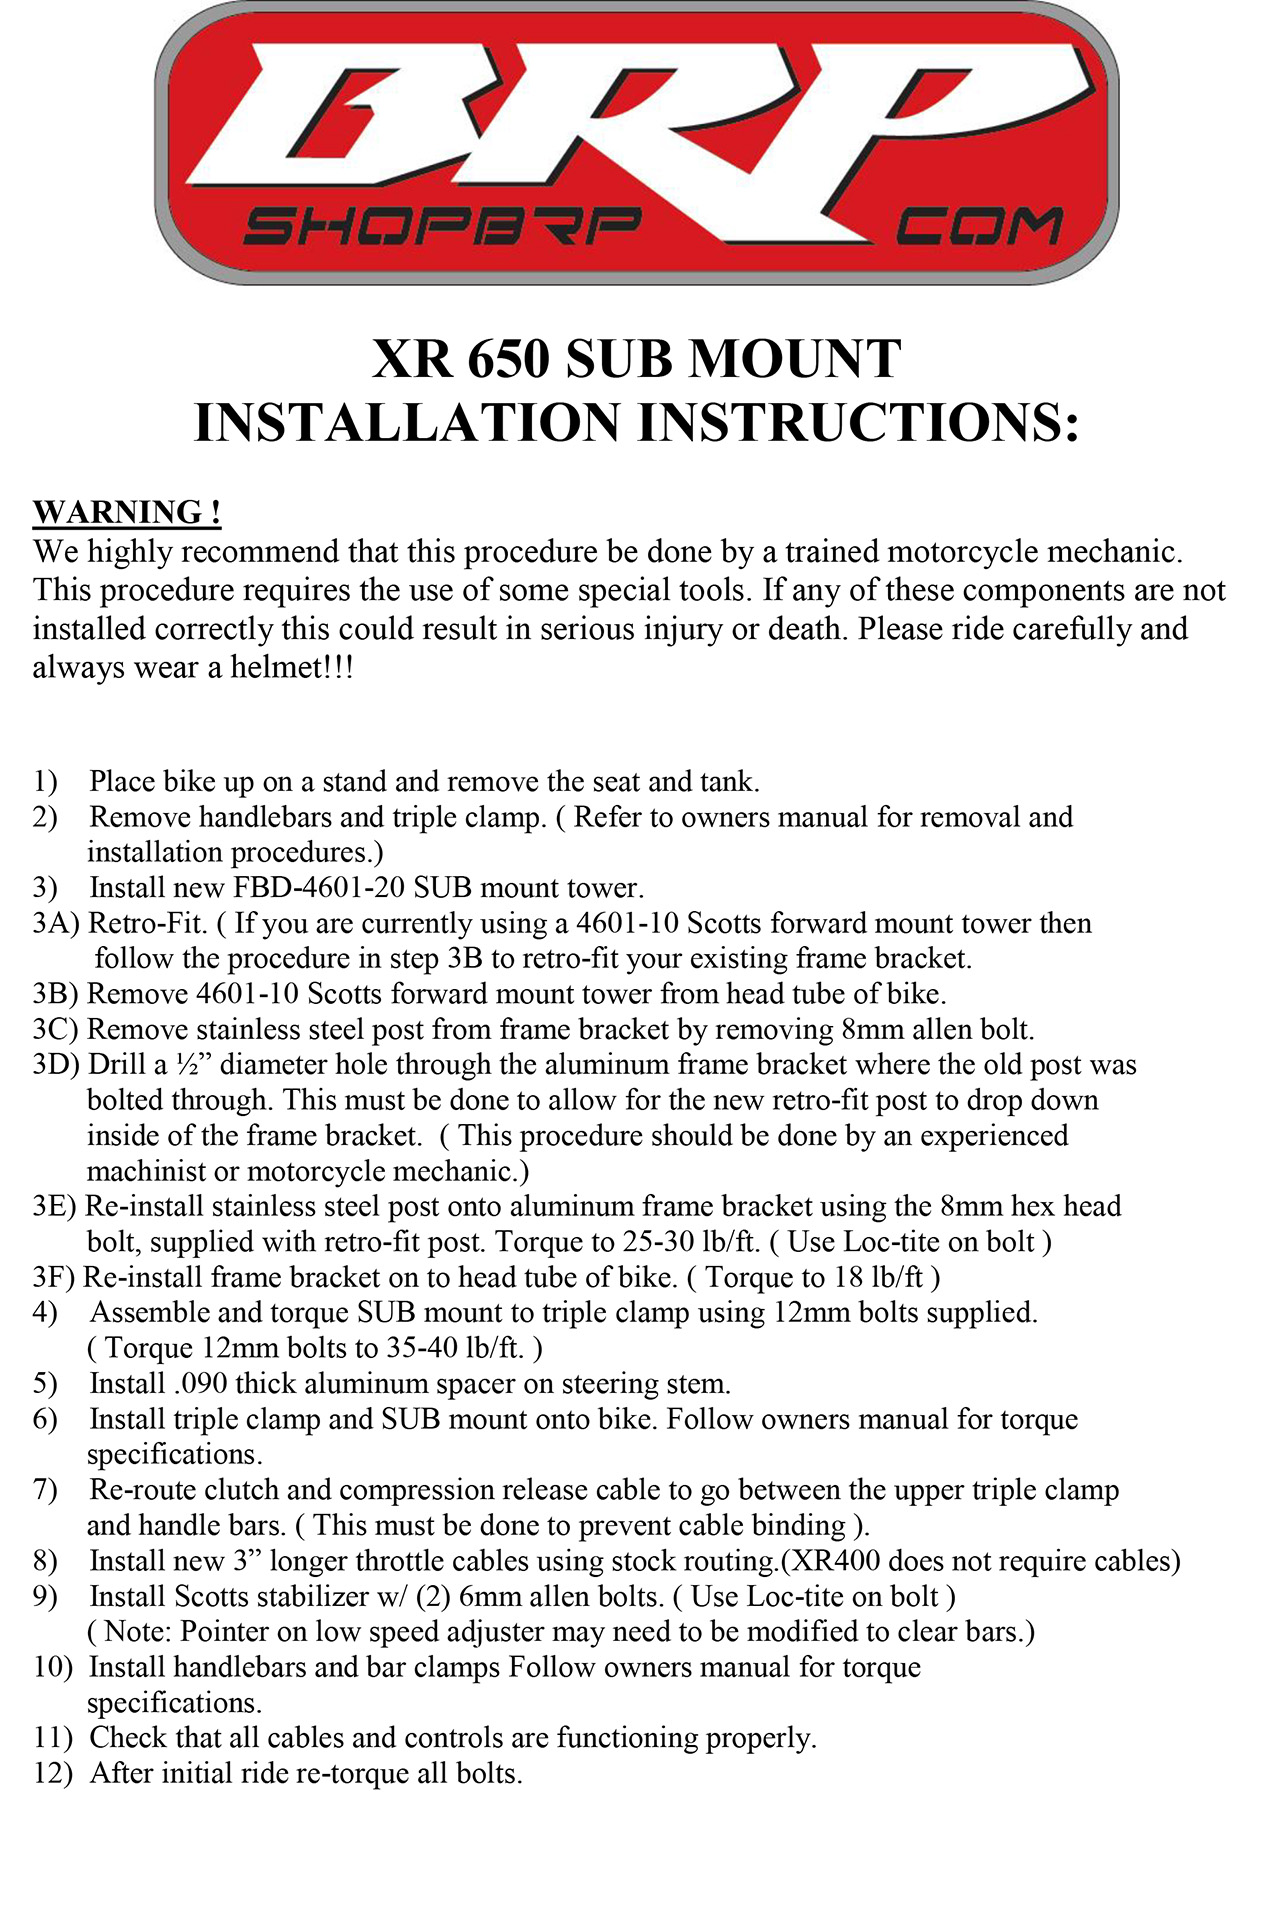 XR 650 Sub Mount INSTALLATION INSTRUCTIONS